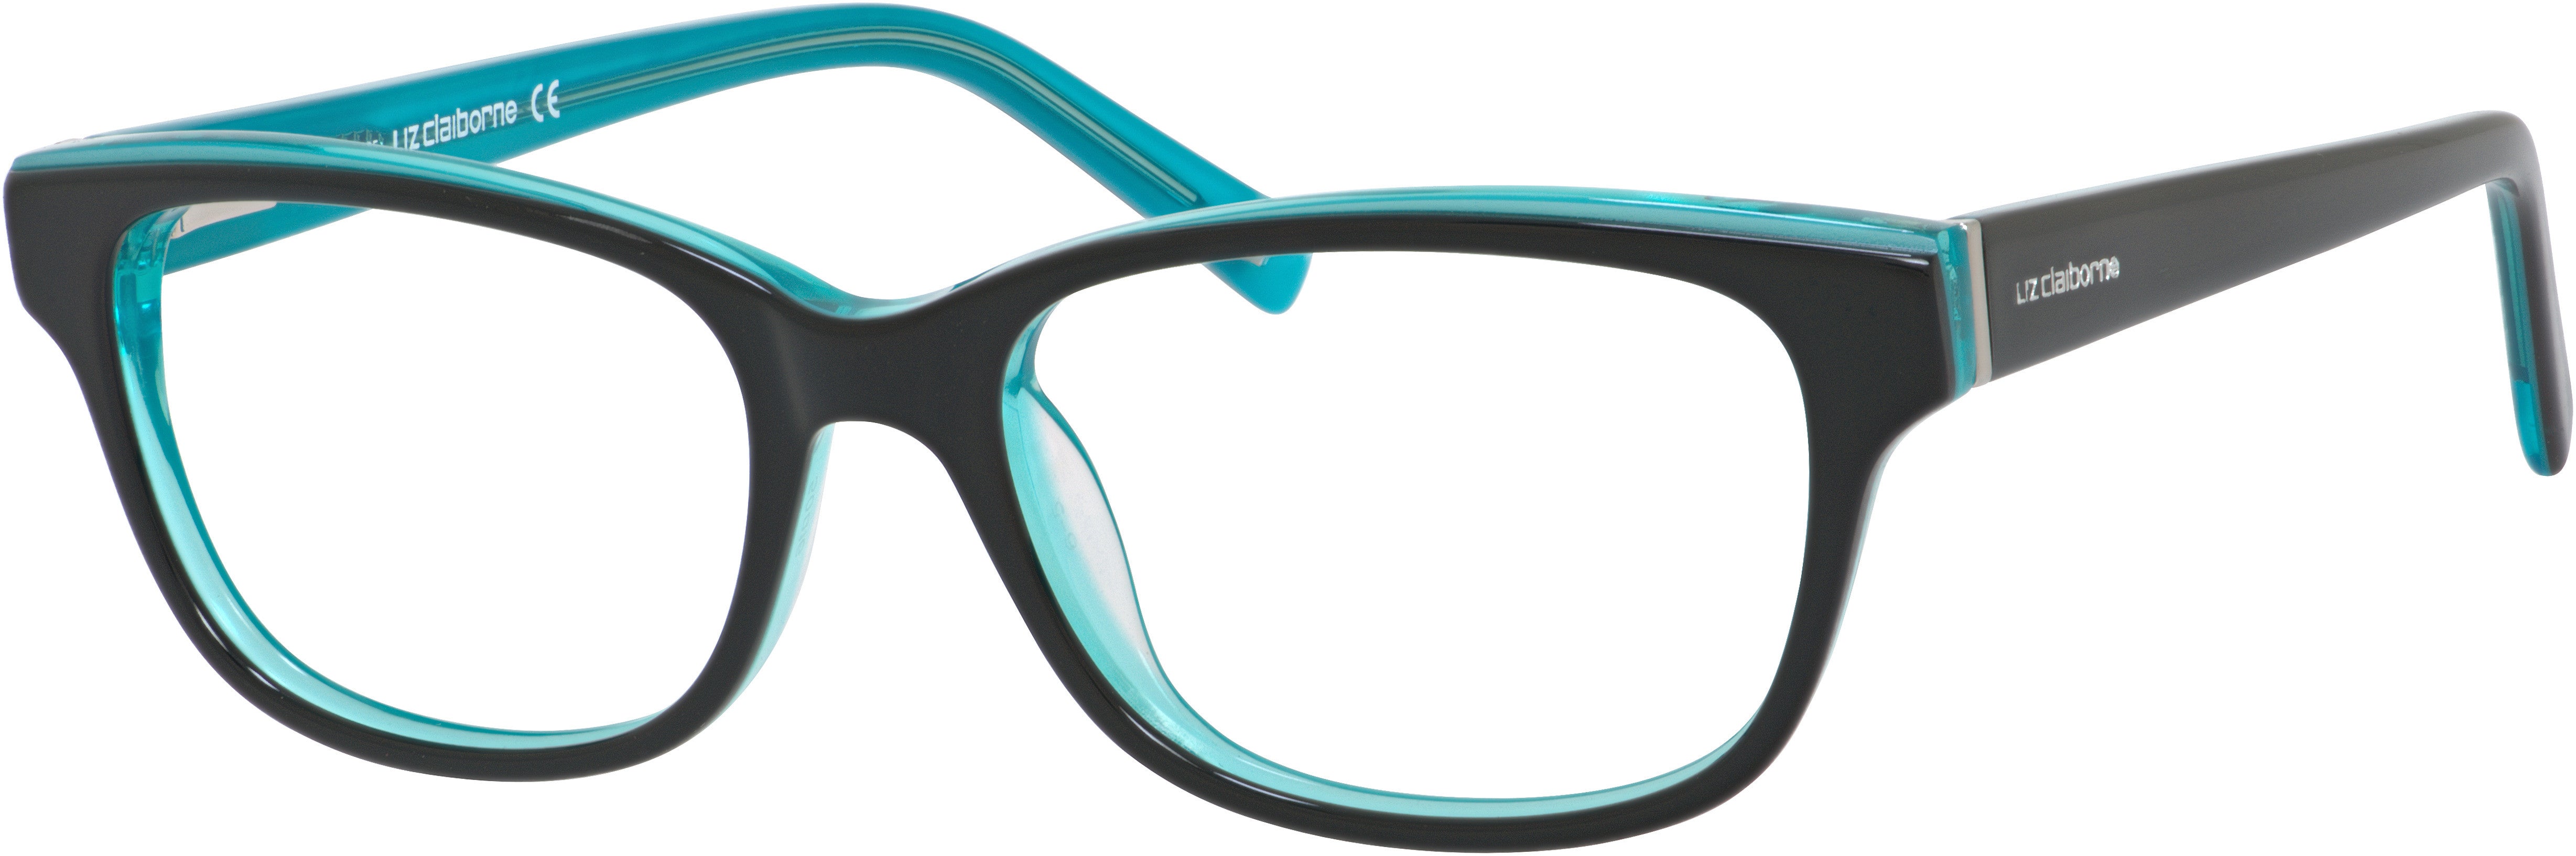  Liz Claiborne 437 Rectangular Eyeglasses 0DB5-0DB5  Black Turquoise (00 Demo Lens)